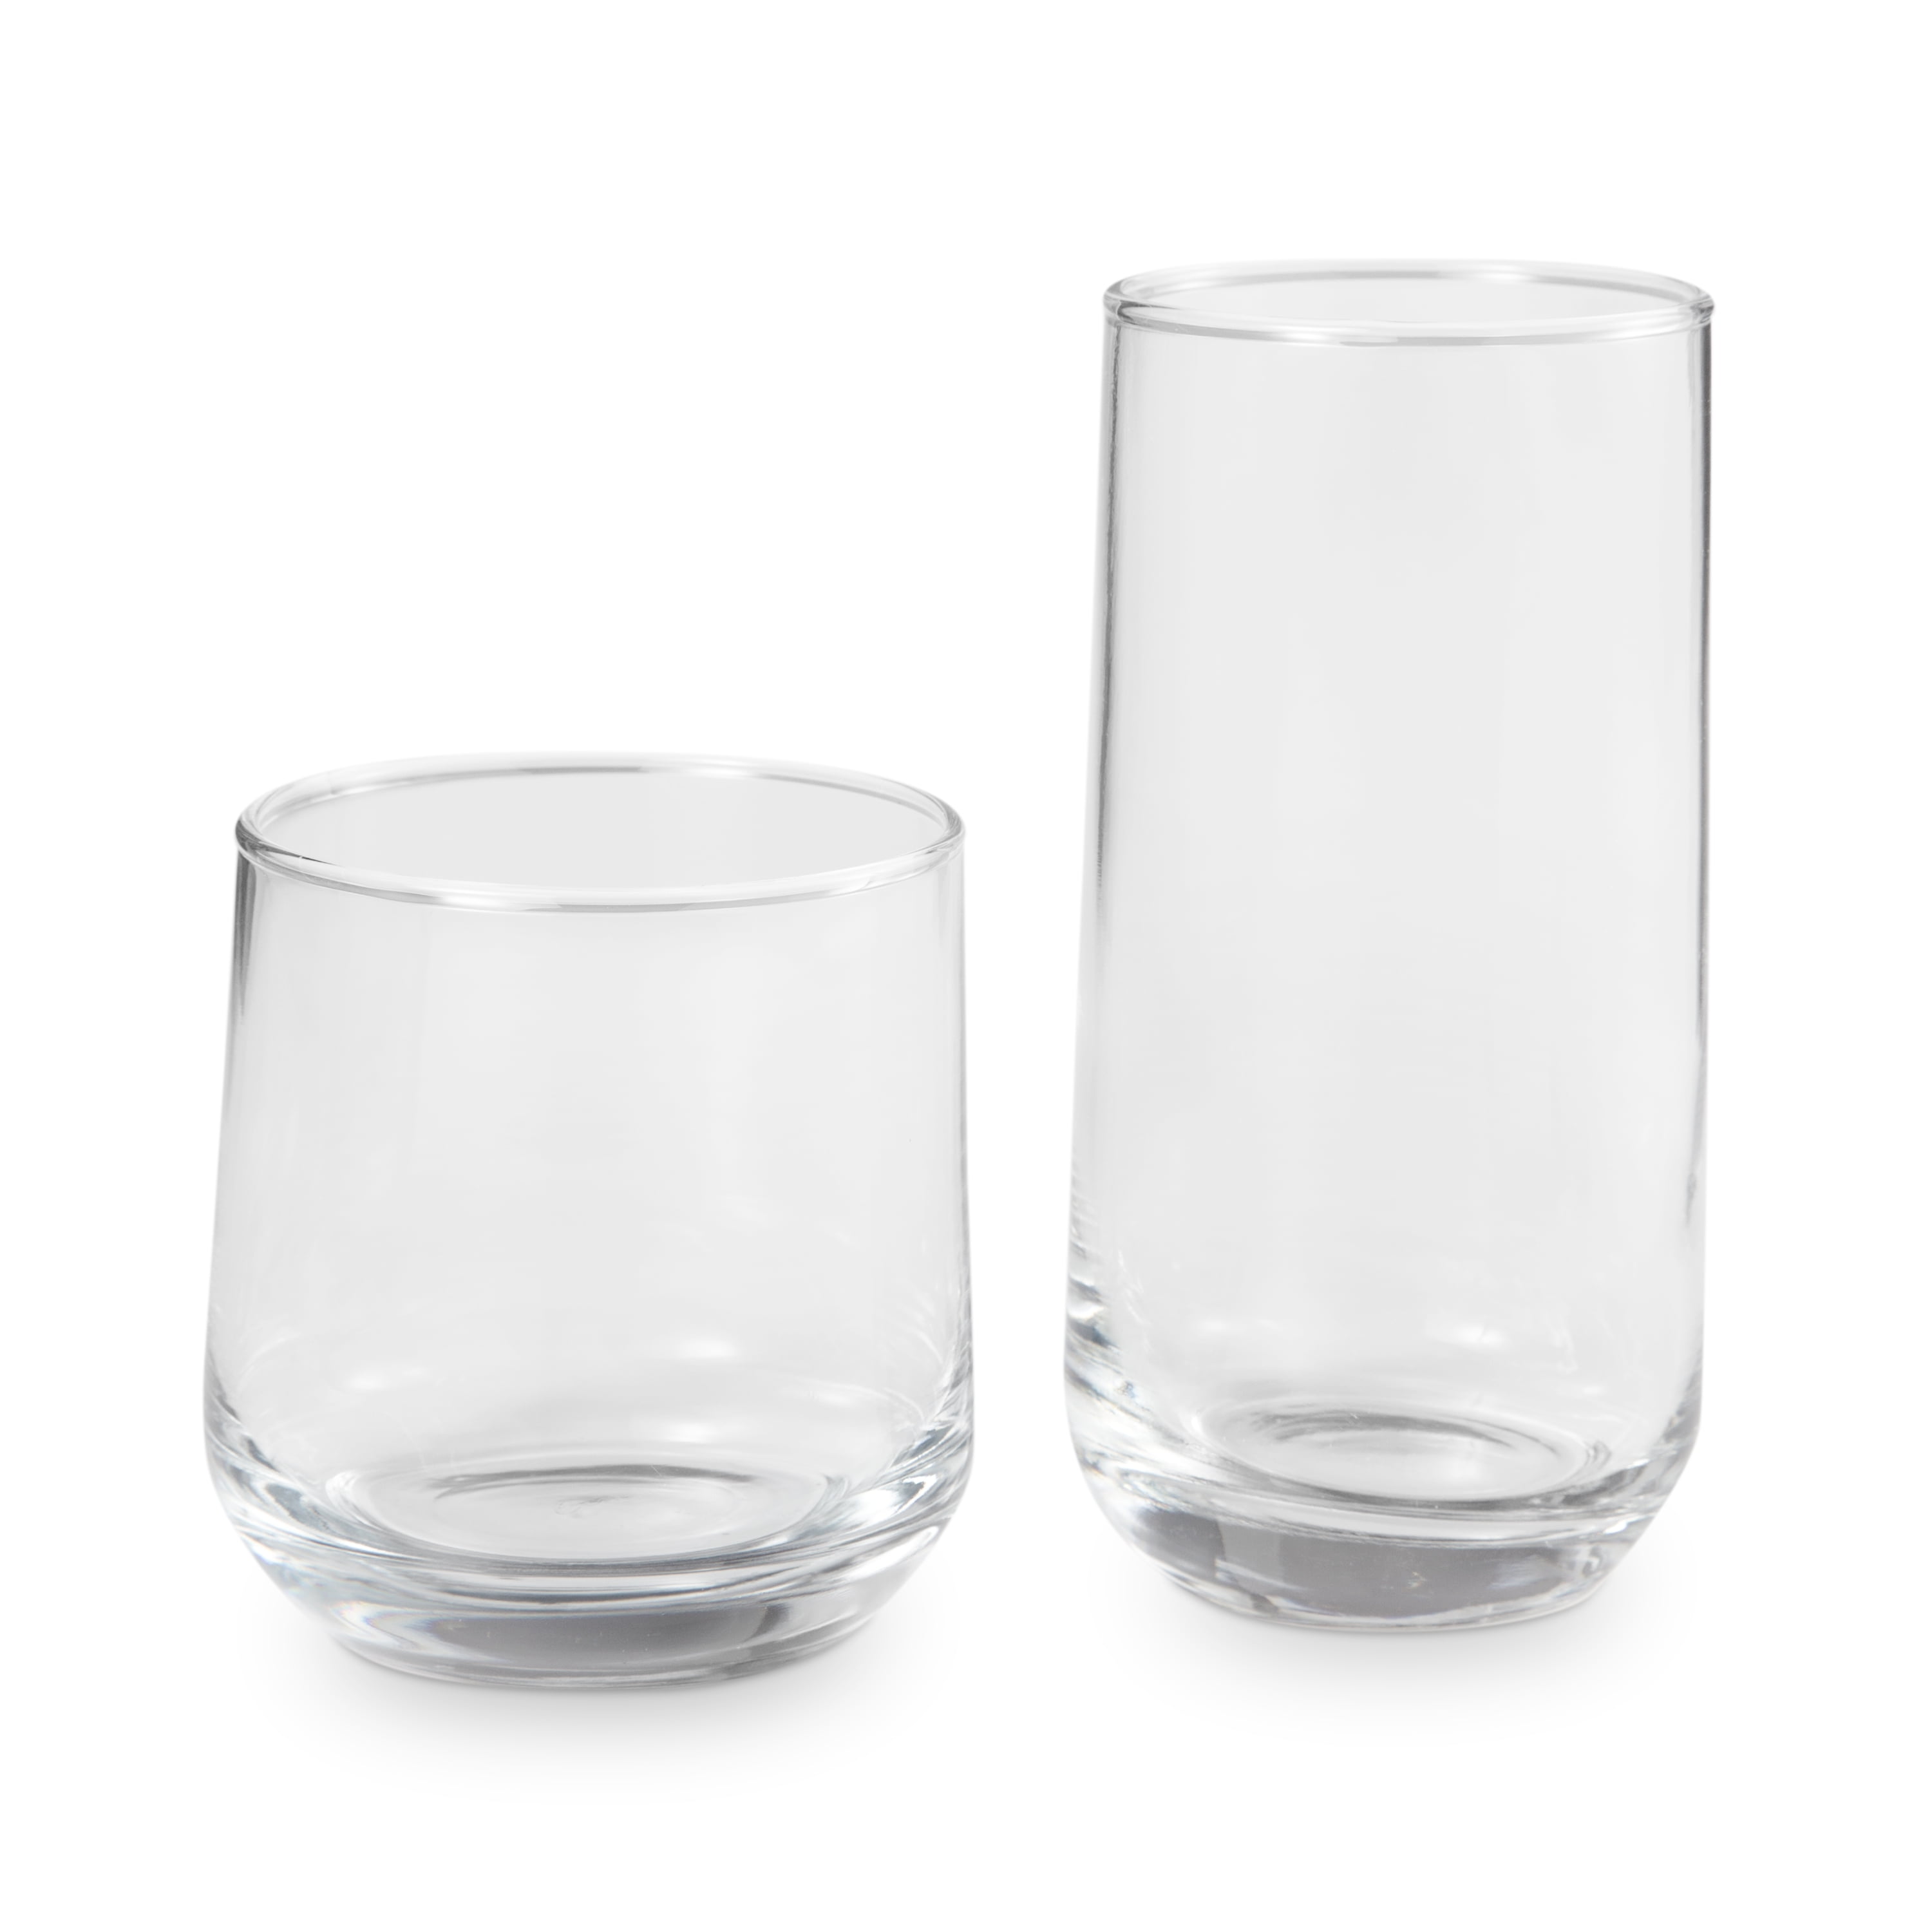 Better Homes & Gardens Hollis Drinking Glasses, 14.4 oz, Set of 8